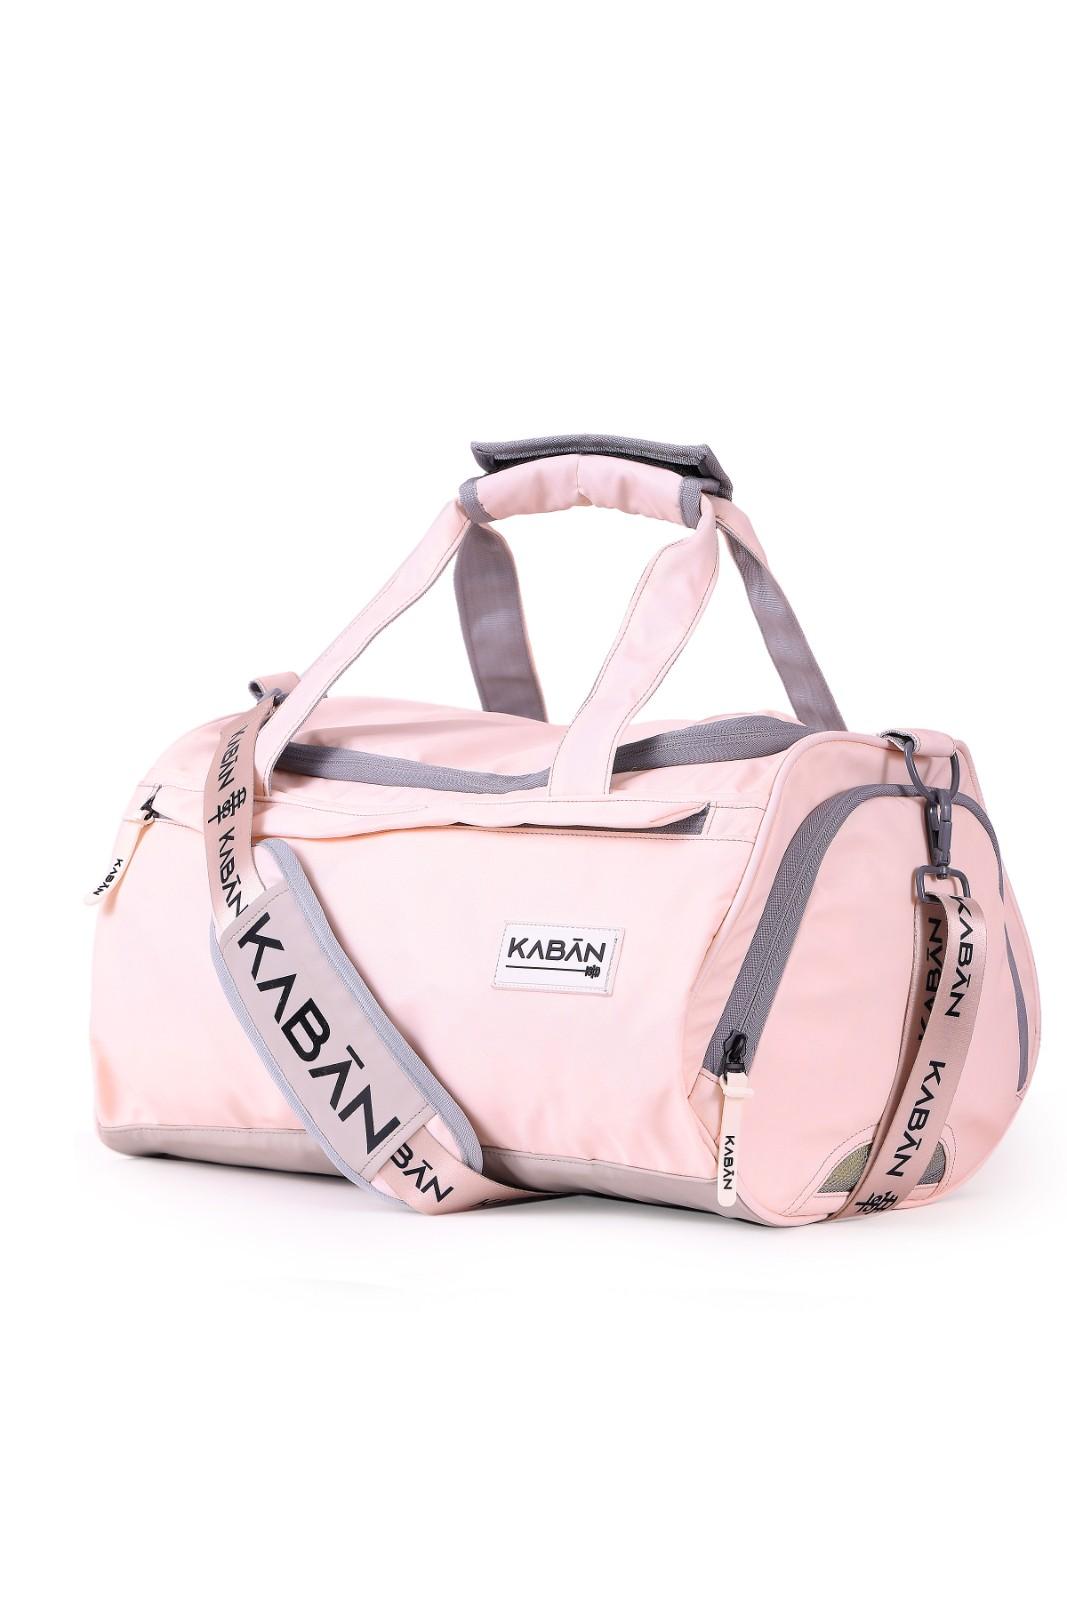 Peach Fuzz Pink Water-Resistant Duffle bag Gym bag